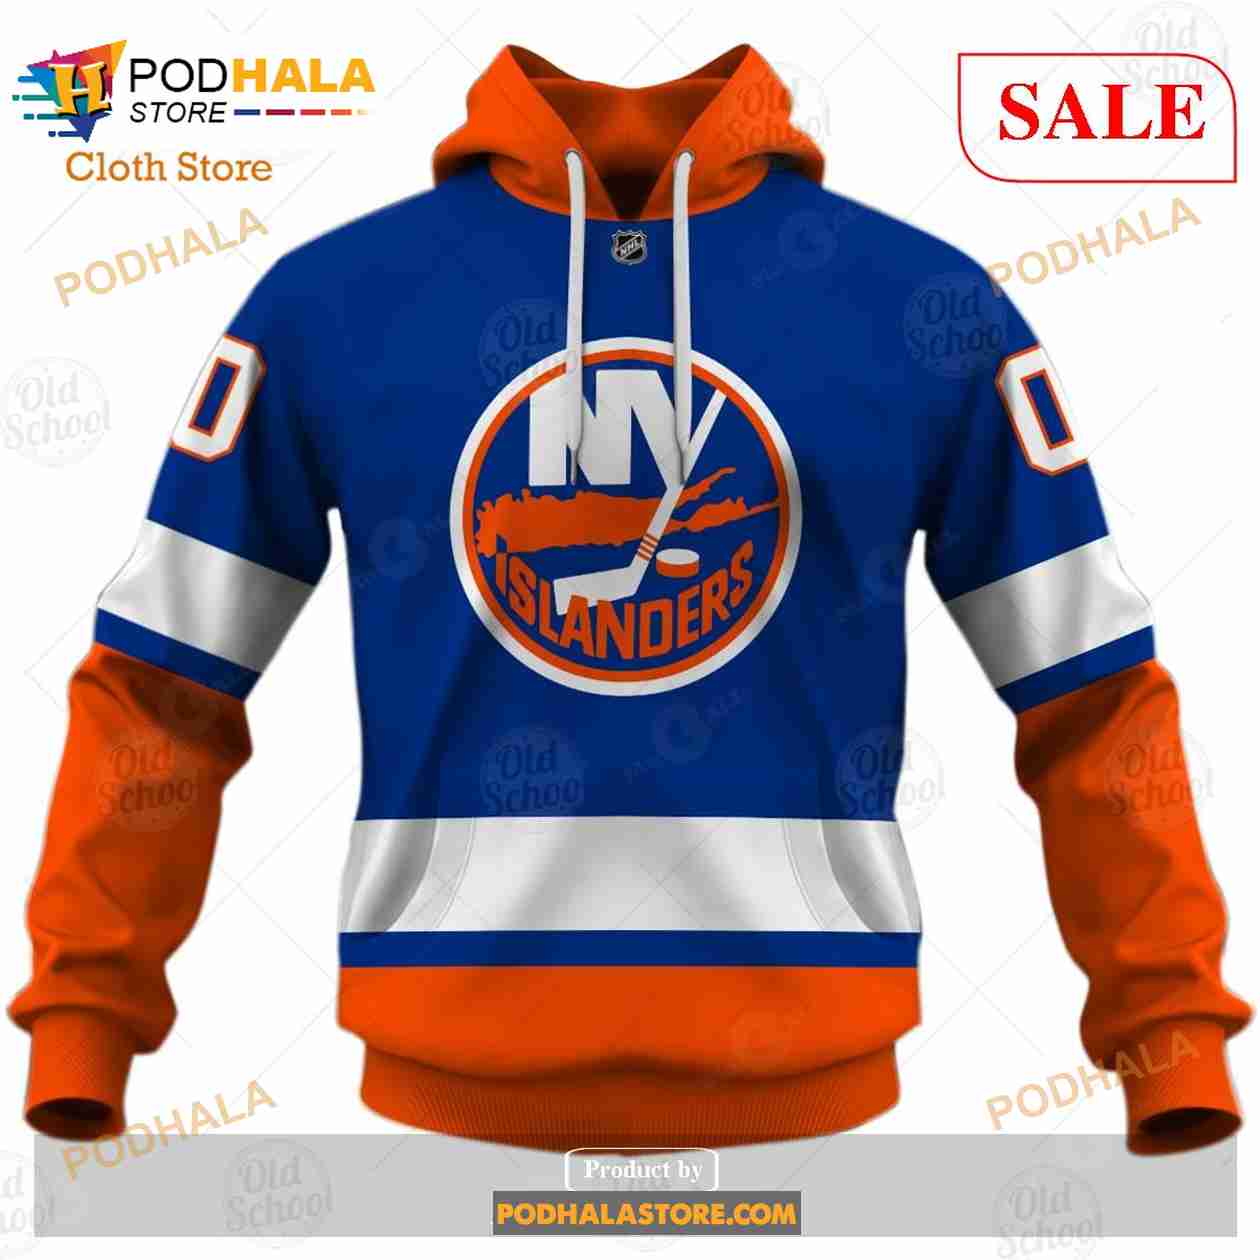 Custom Name & Number NHL Reverse Retro New York Islanders Shirt